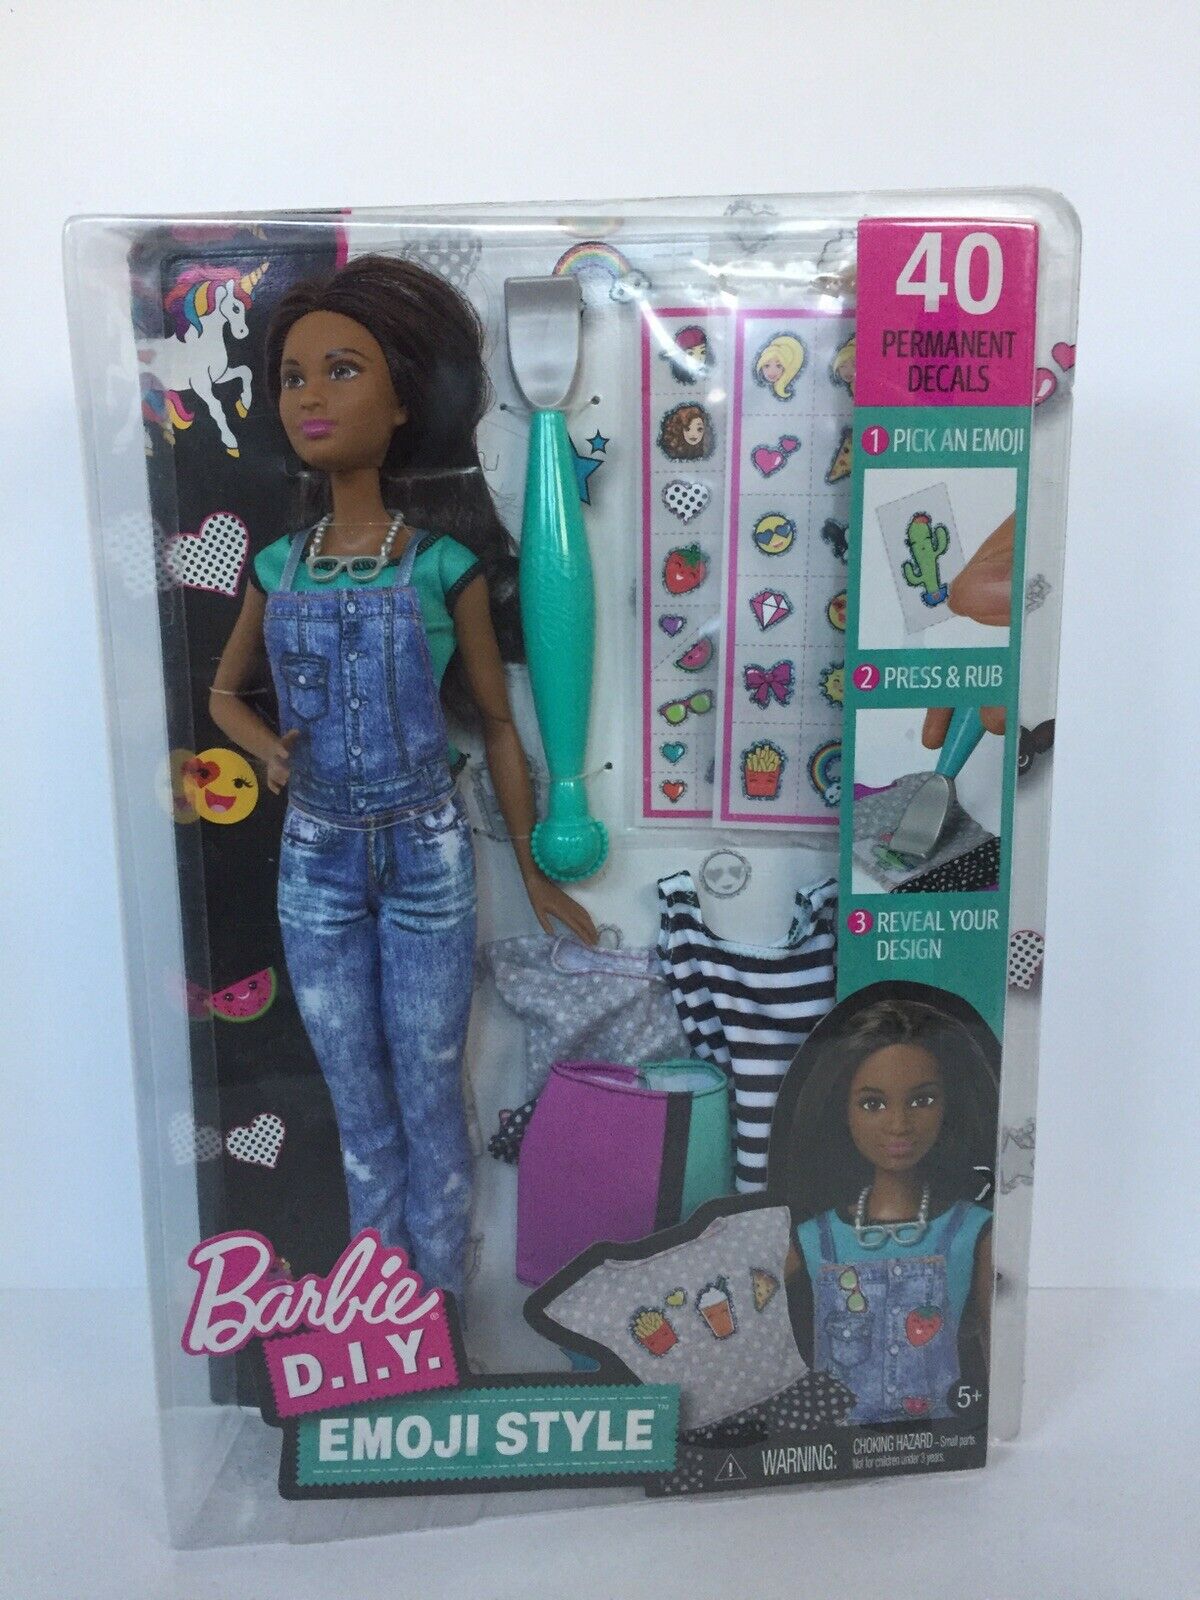 Vintage Mattel Barbie D.i.y. Emoji Style Doll Decals Dyn94 New Unopened Box 2016